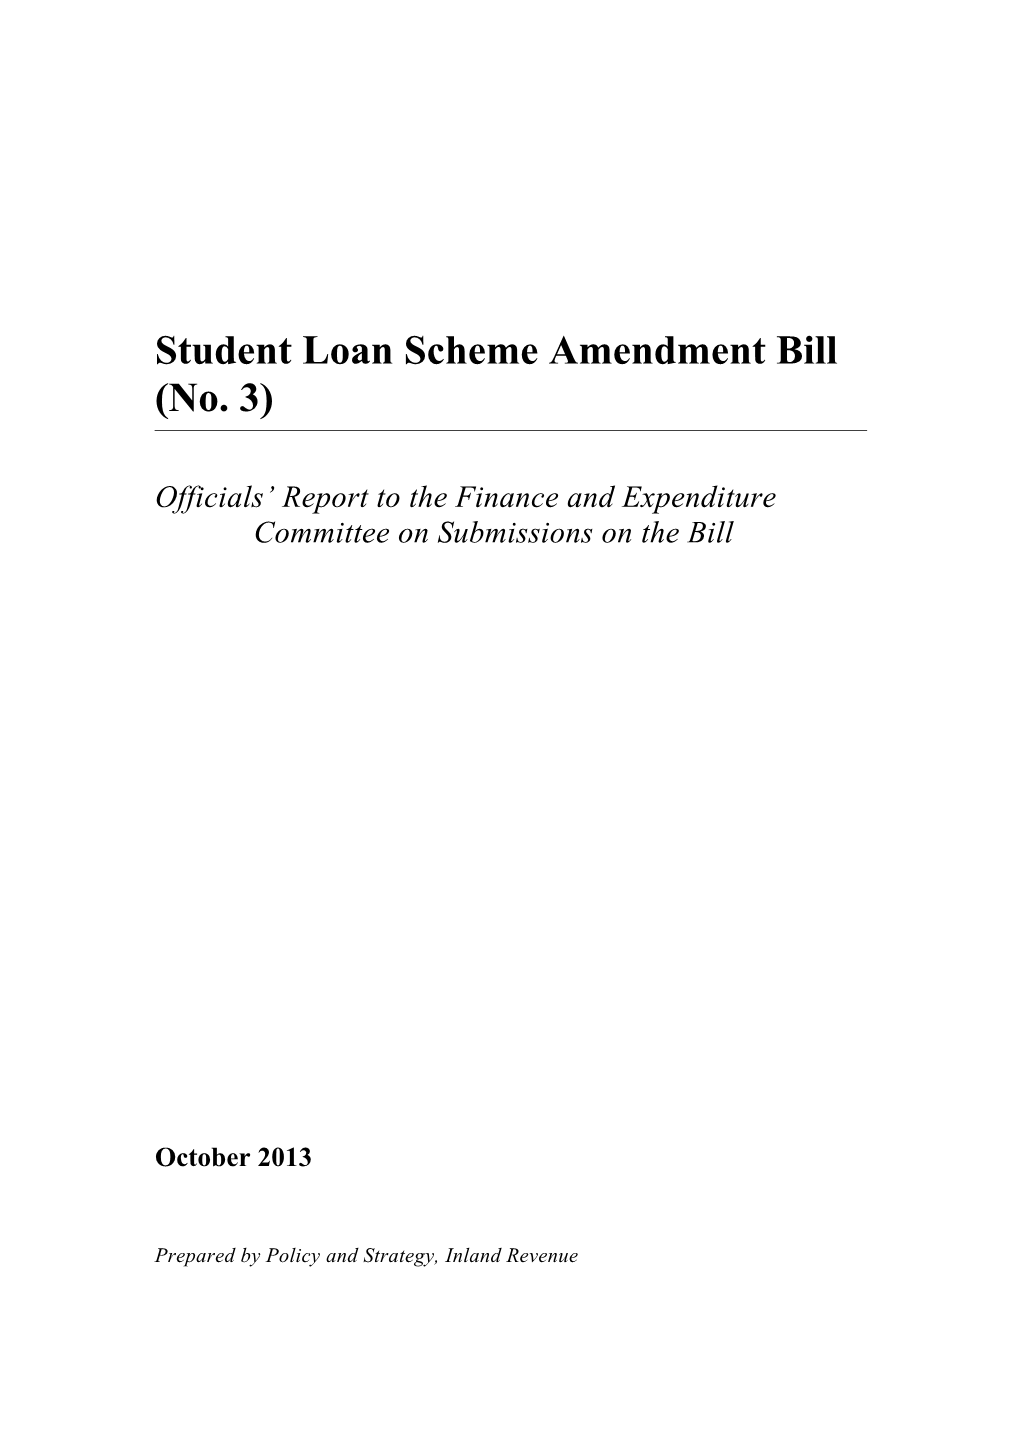 Student Loan Scheme Amendment Bill (No. 3)